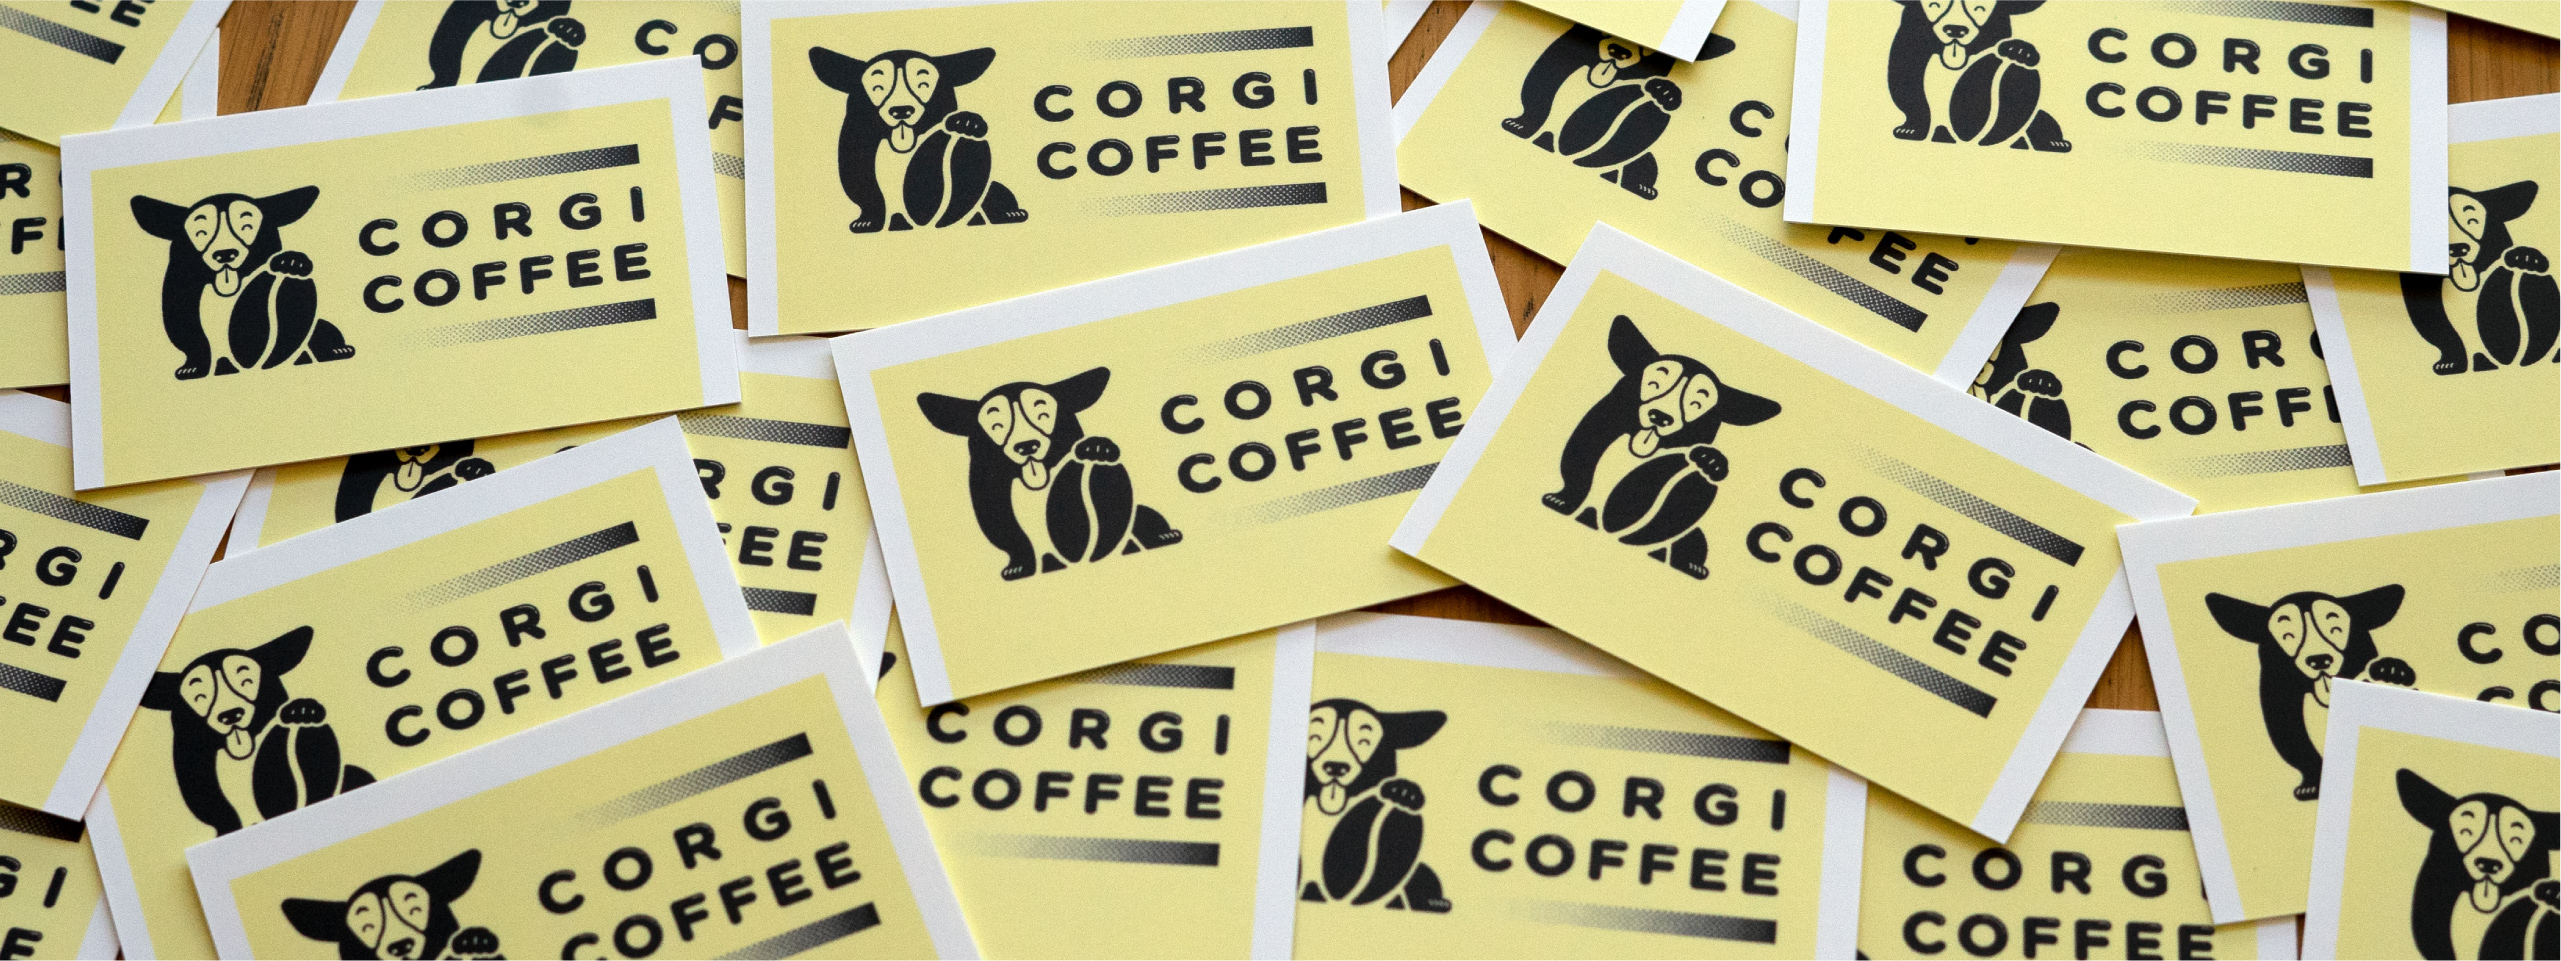 Corgi Coffee